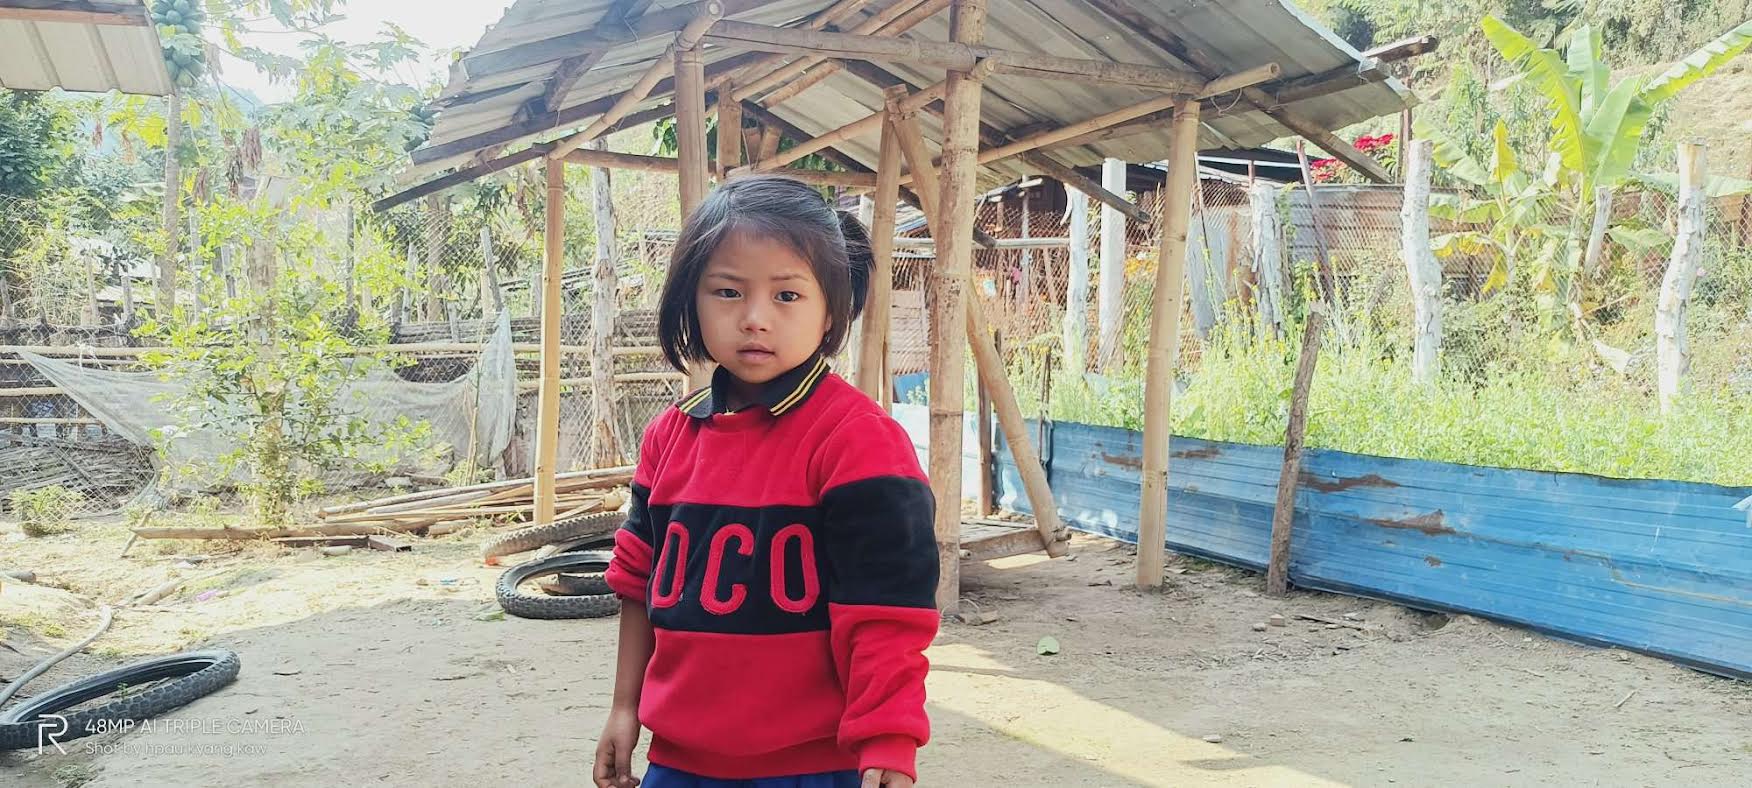 Kawn Ja Htoi Tsin is wearing a red and black jumper stood outside in a garden in Kachin State